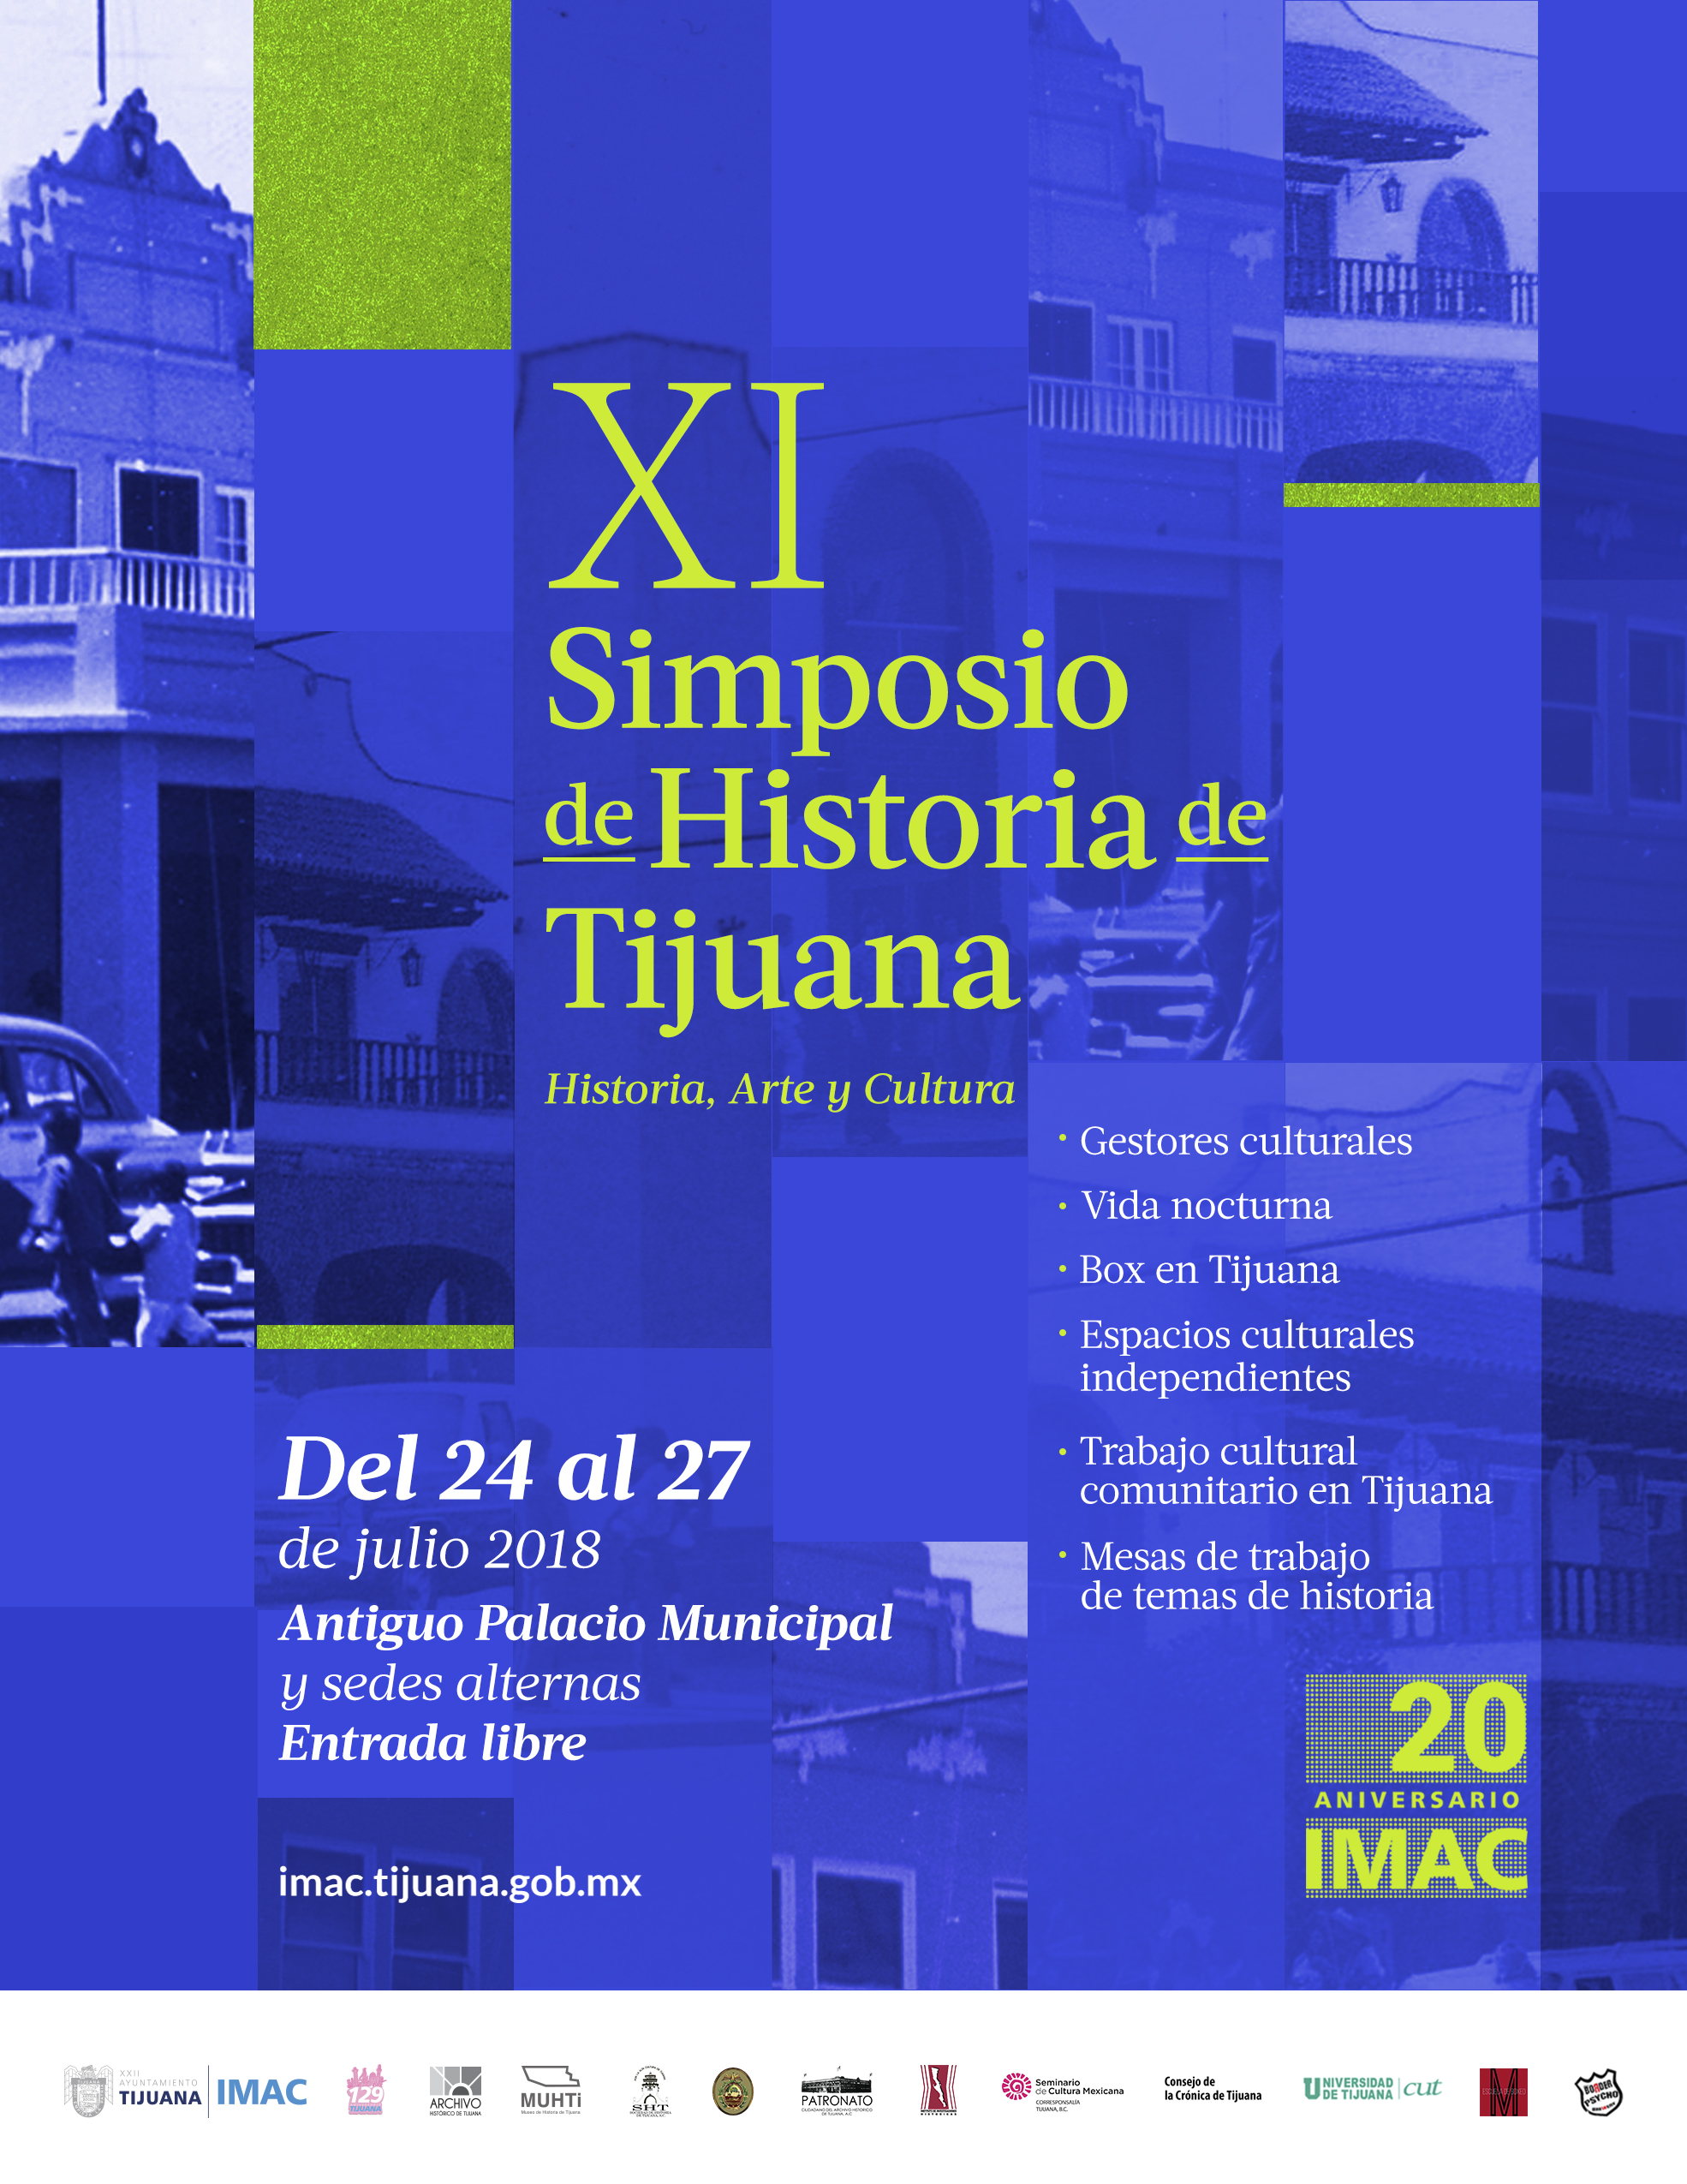 Invita IMAC al XI Simposio de Historia de Tijuana